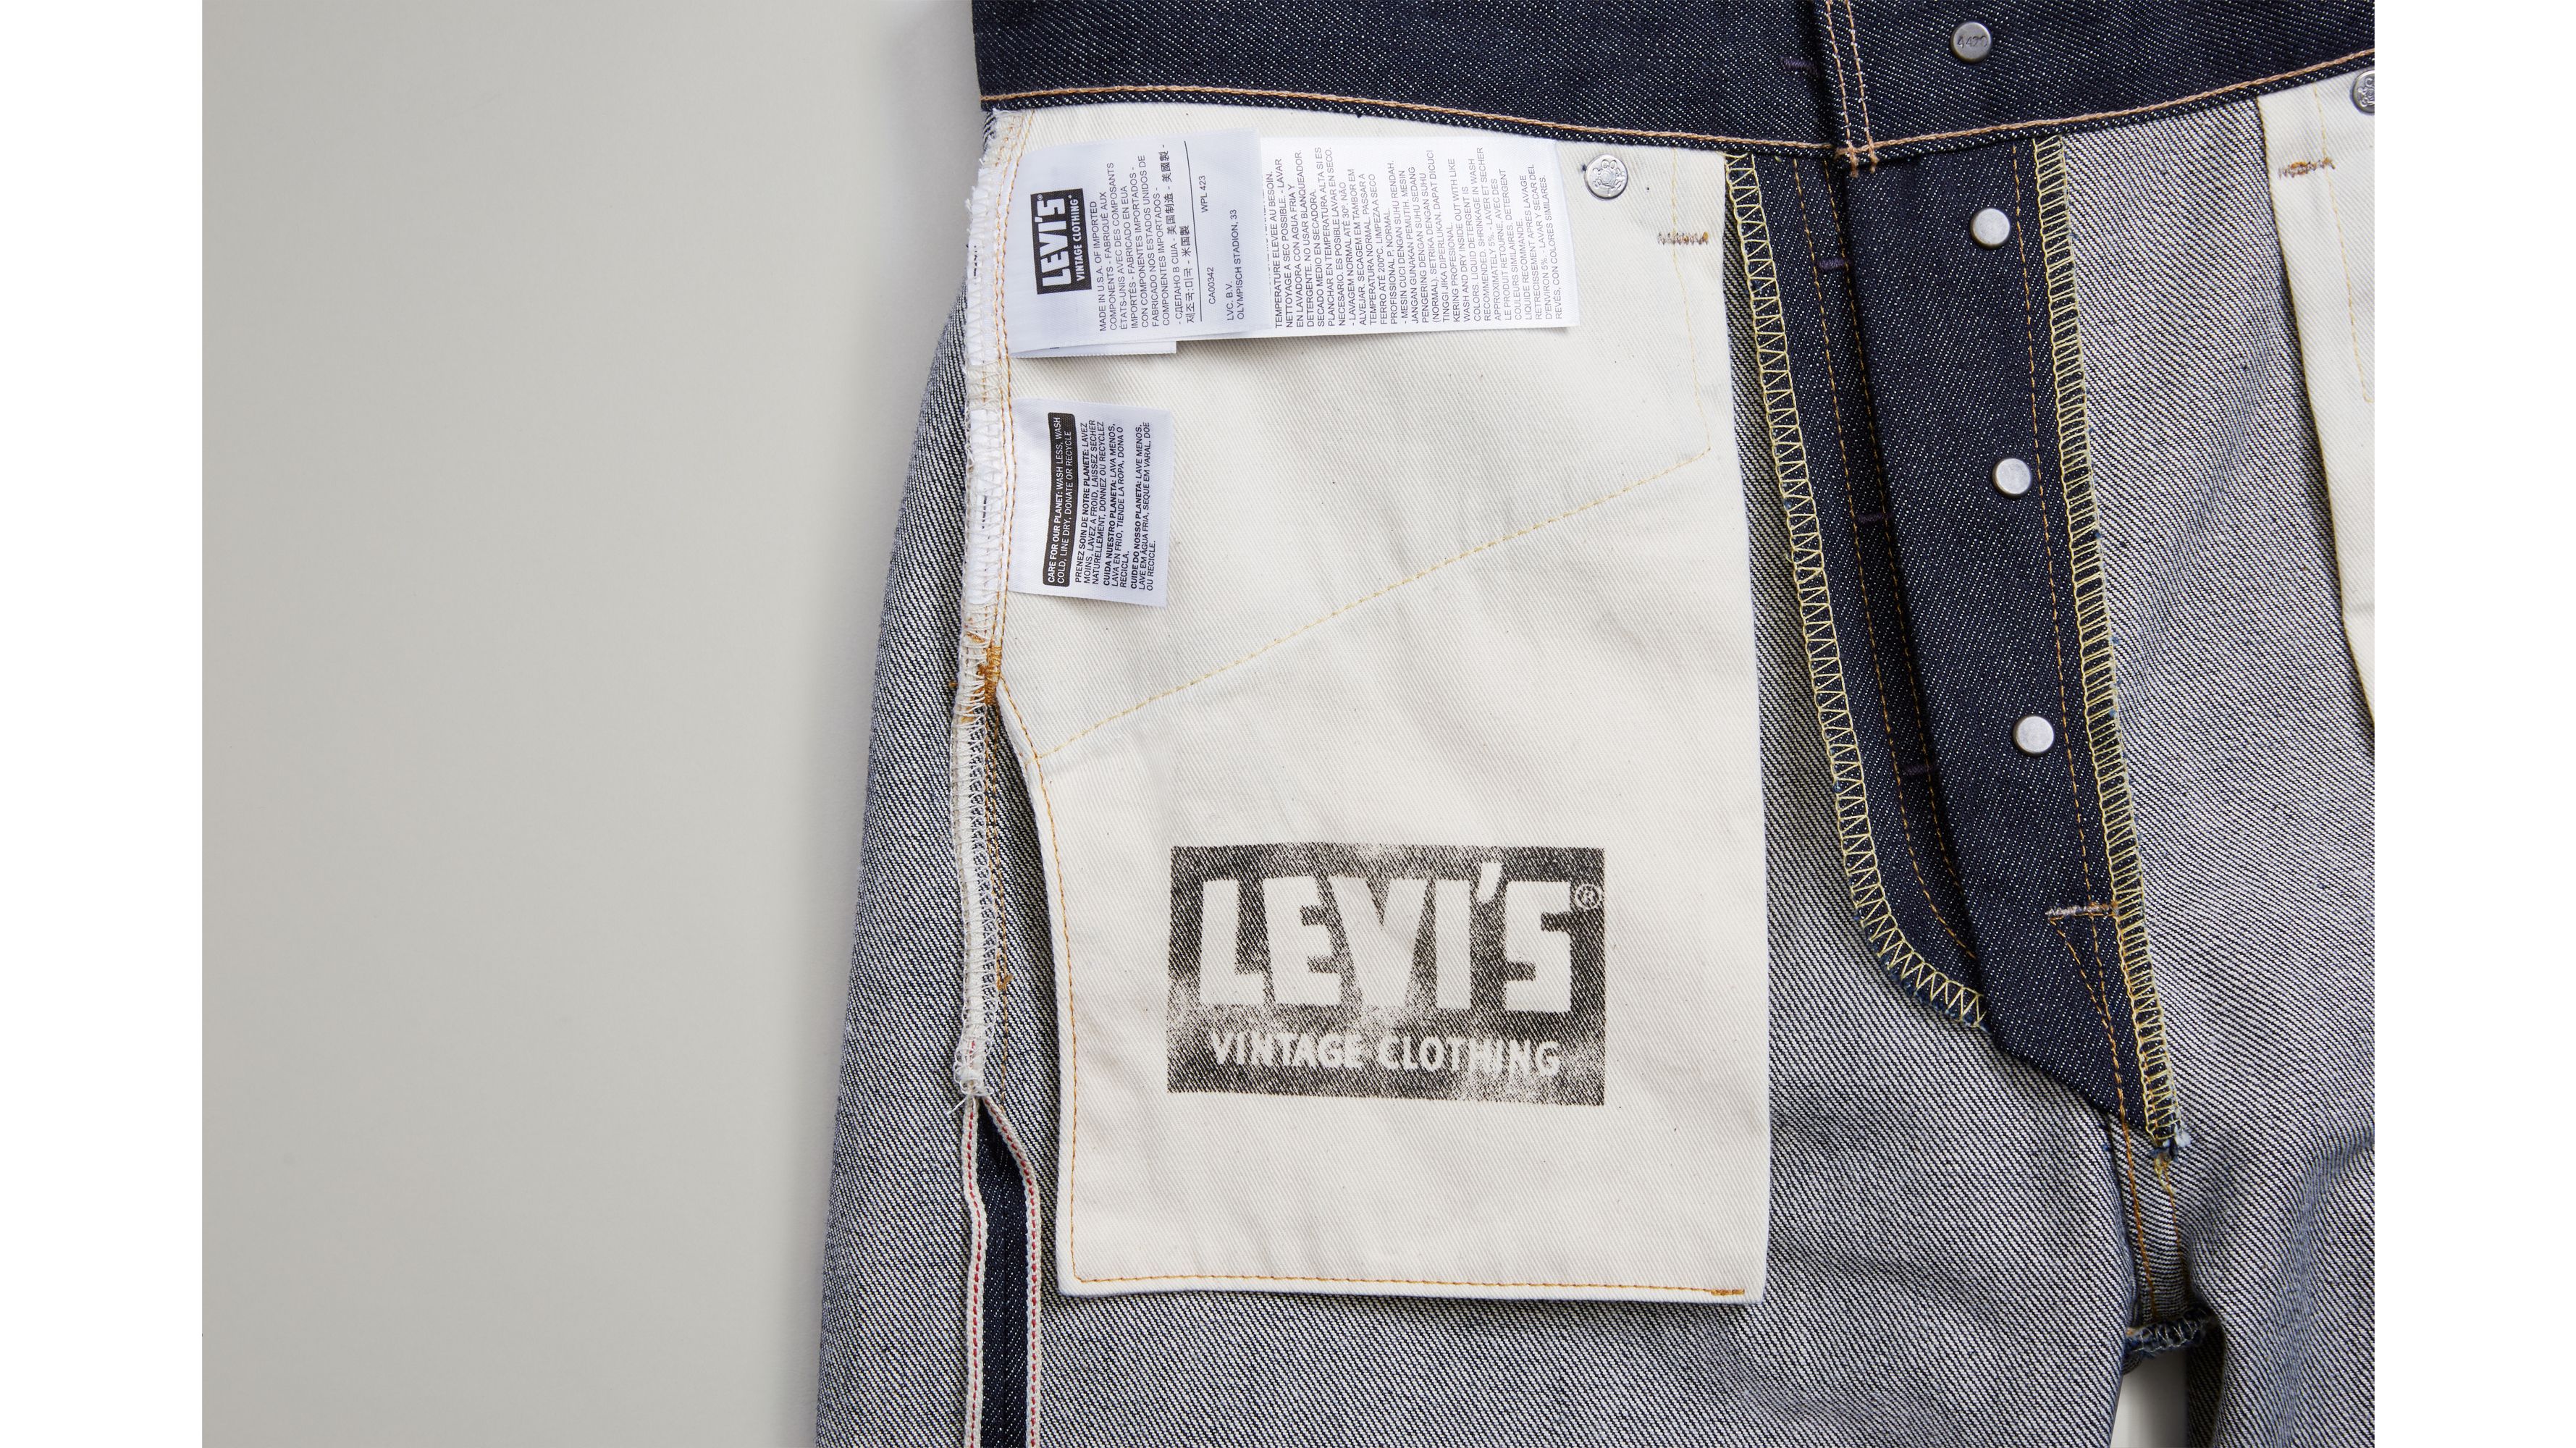 1966 501® Original Fit Selvedge Men's Jeans - Dark Wash | Levi's® US